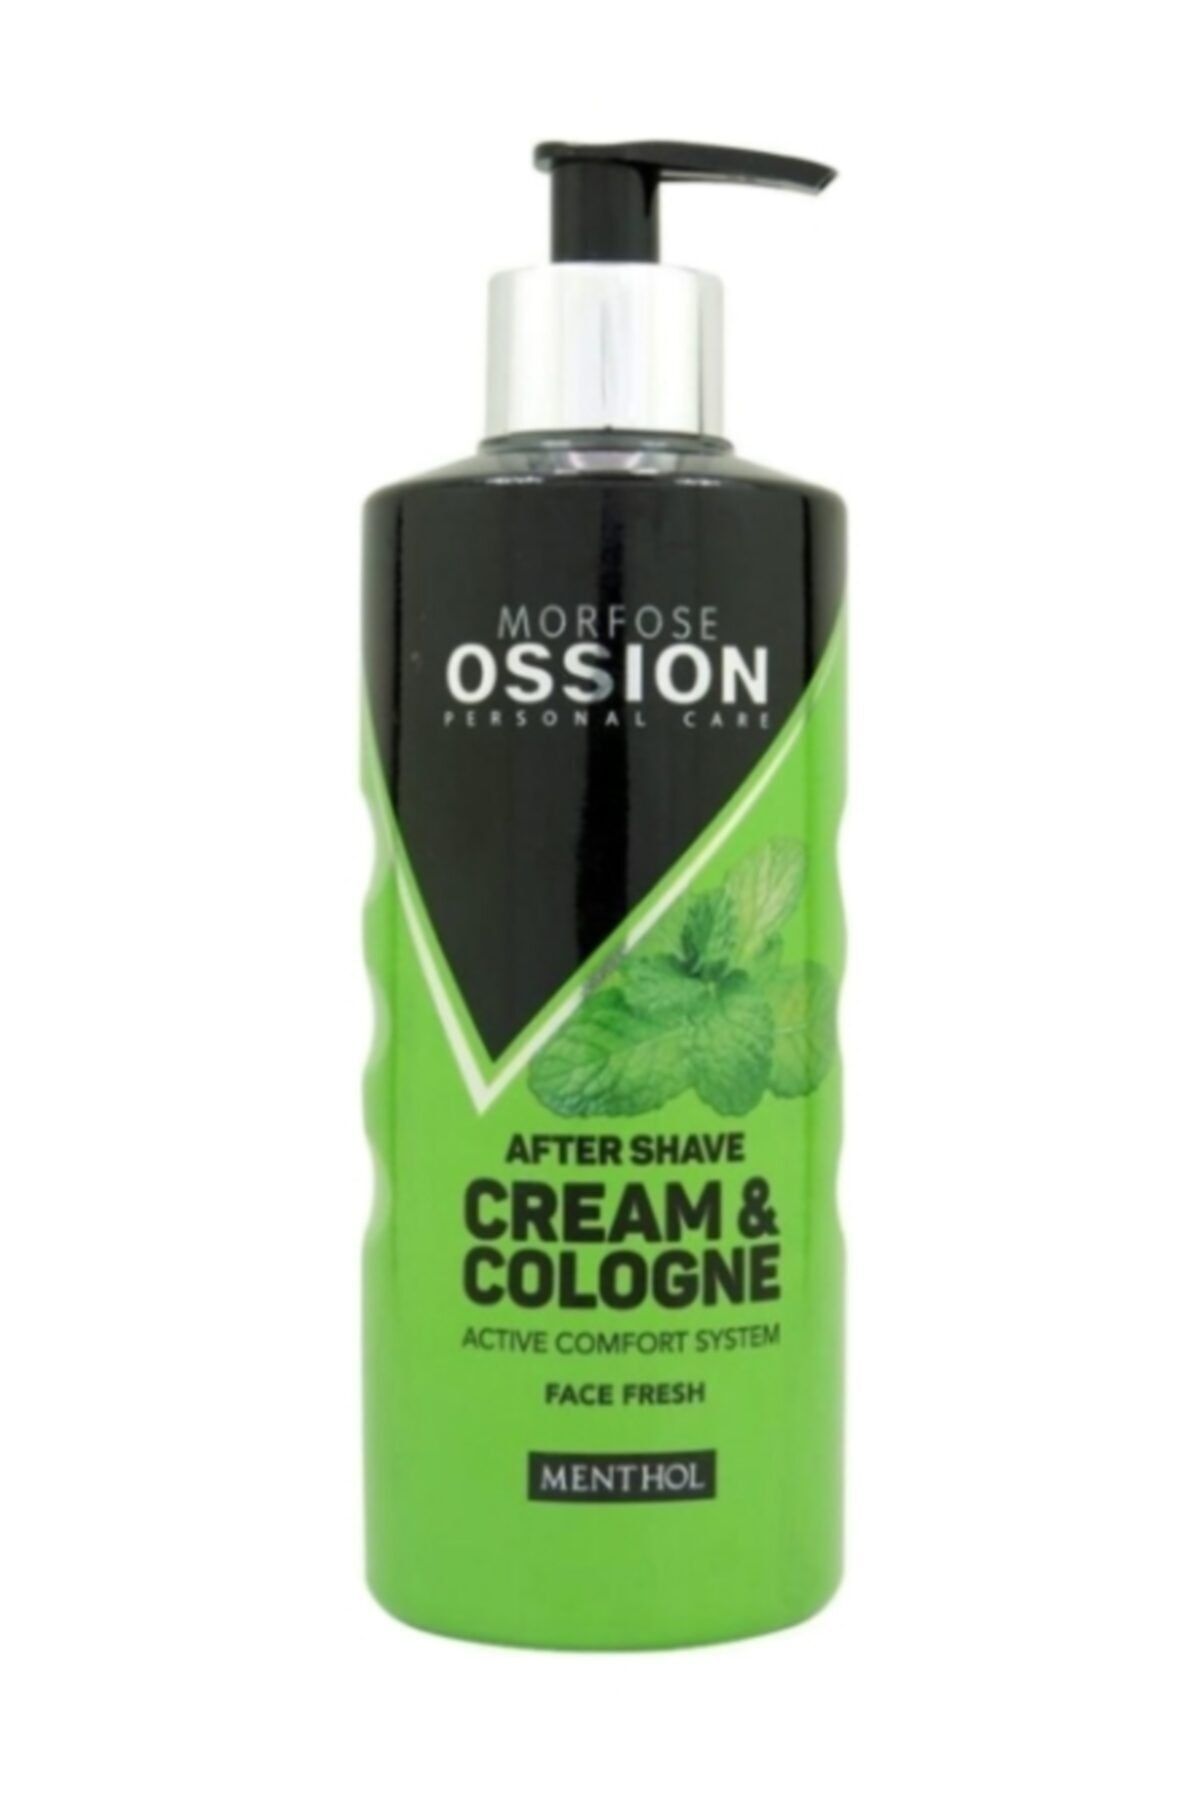 Morfose Ossion After Shave Cream Cologne Menthol